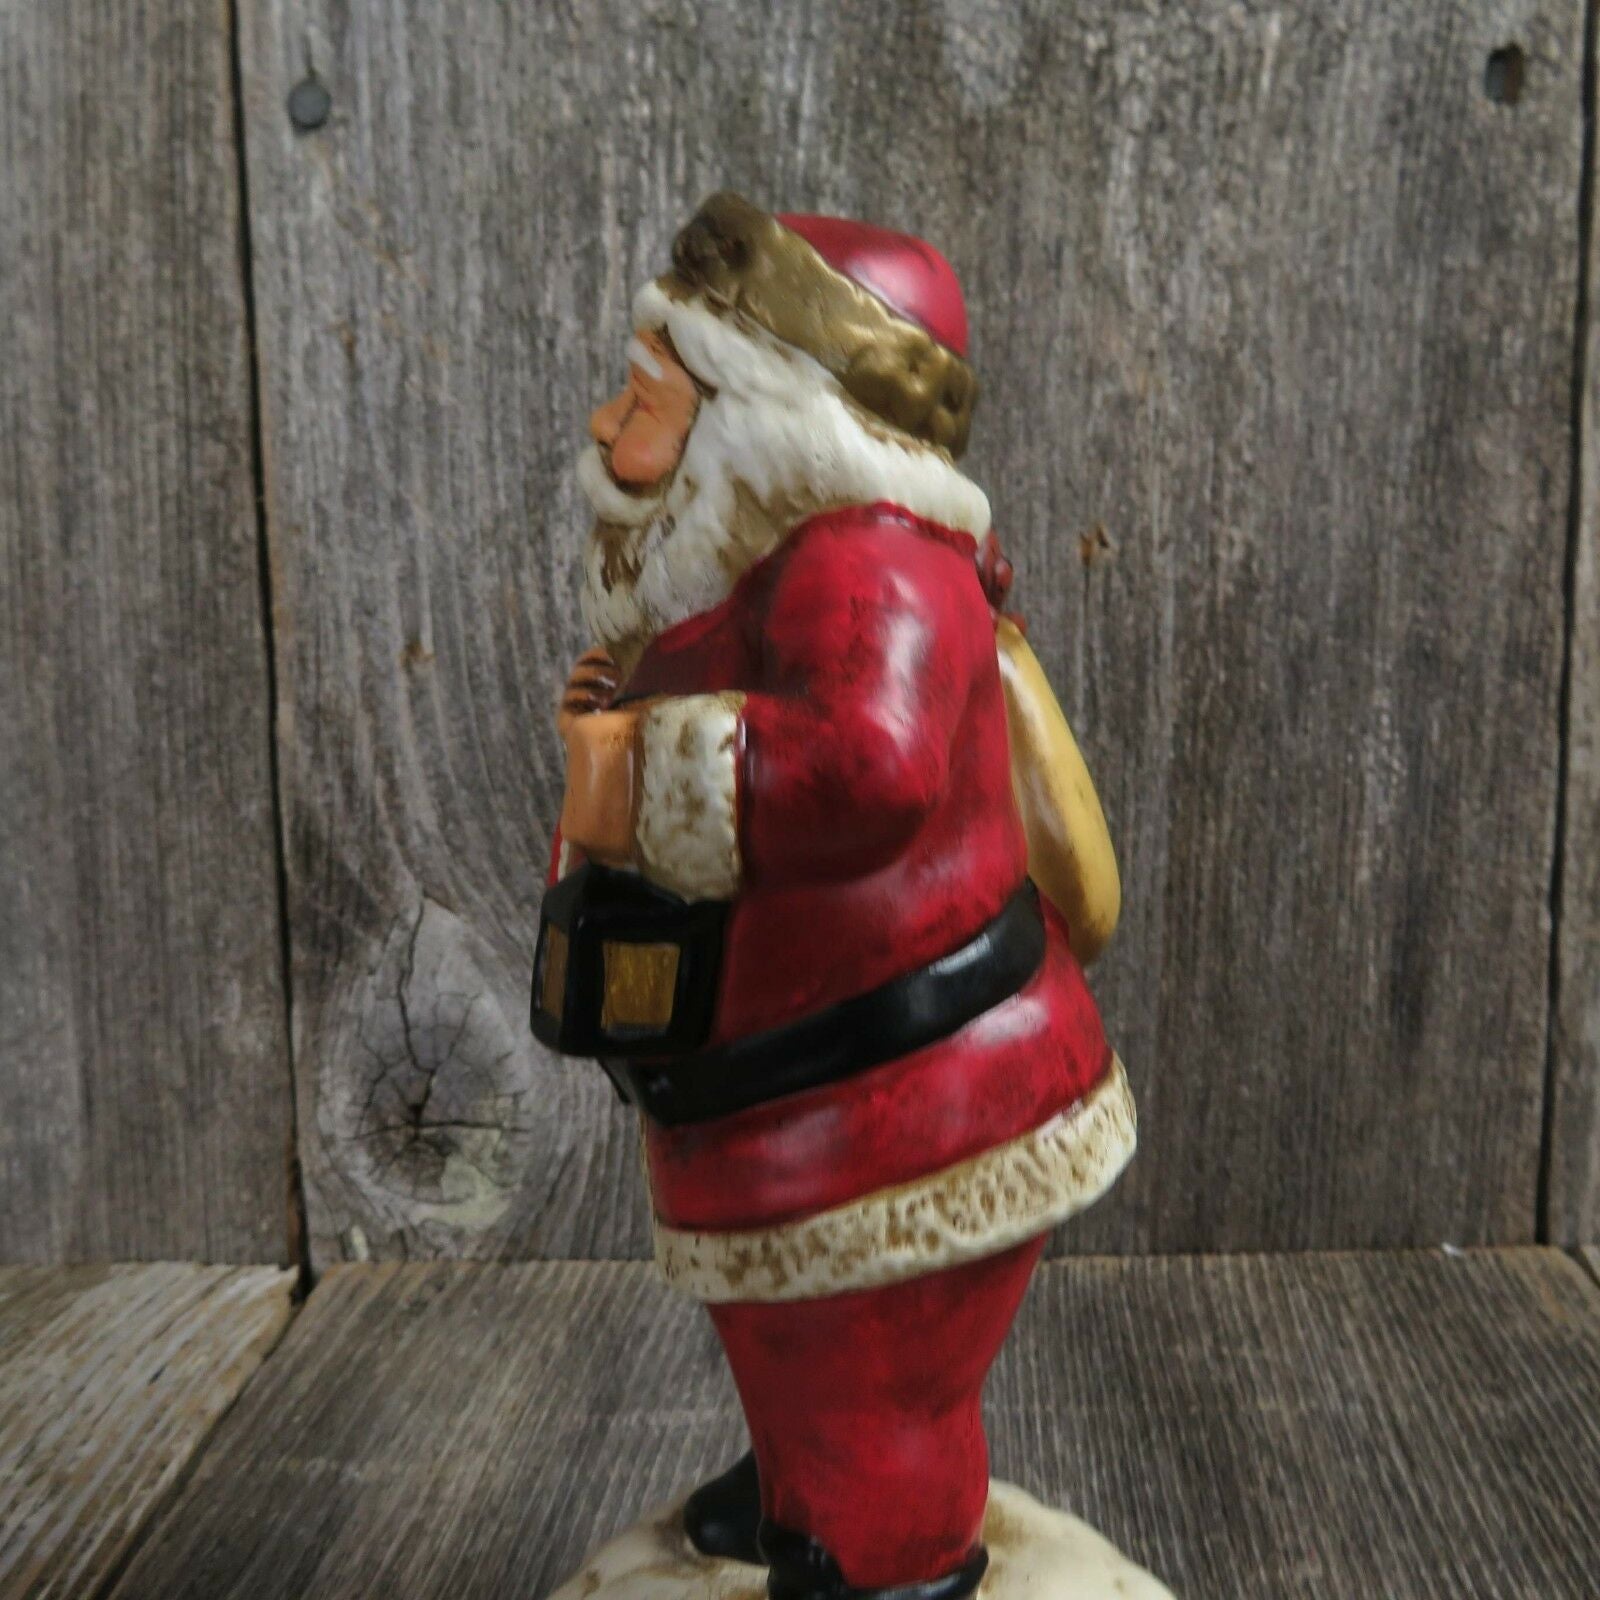 Vintage Santa Claus Music Box Lefton 1986 Old World Rustic Christmas Figurine - At Grandma's Table